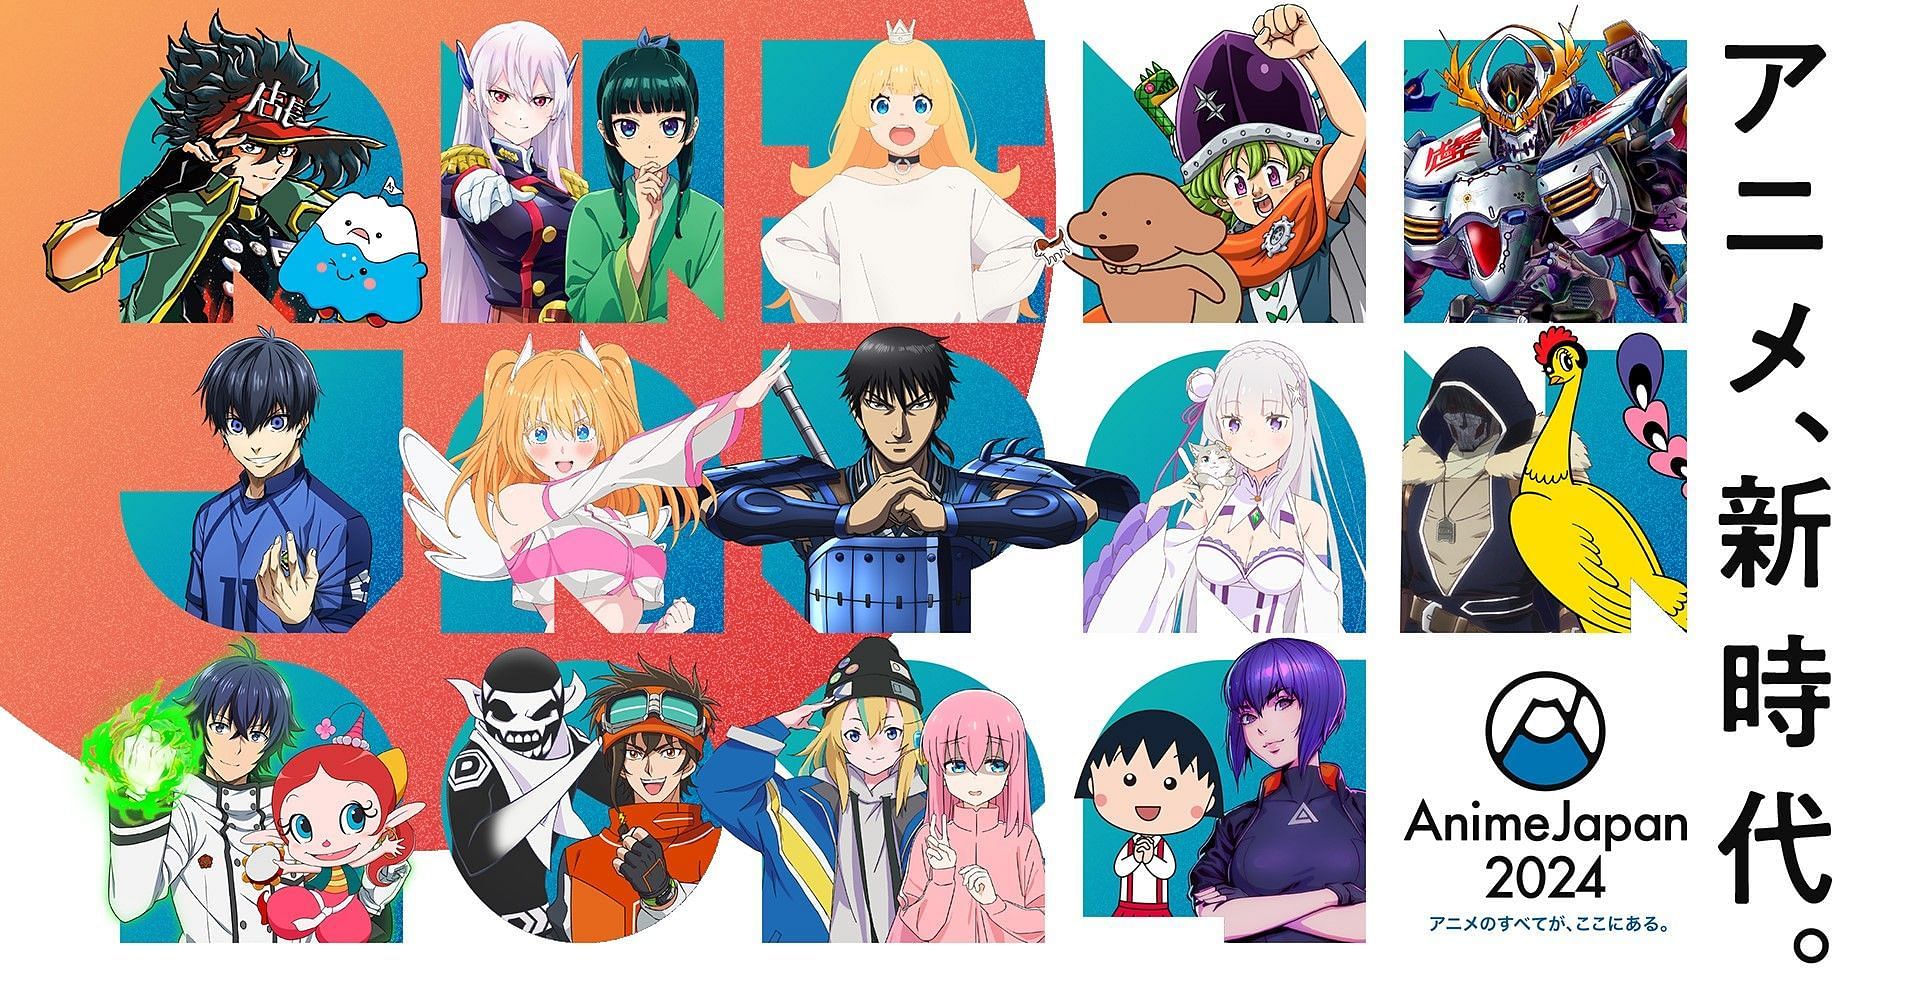 AnimeJapan 2024 reveals key visual for the event